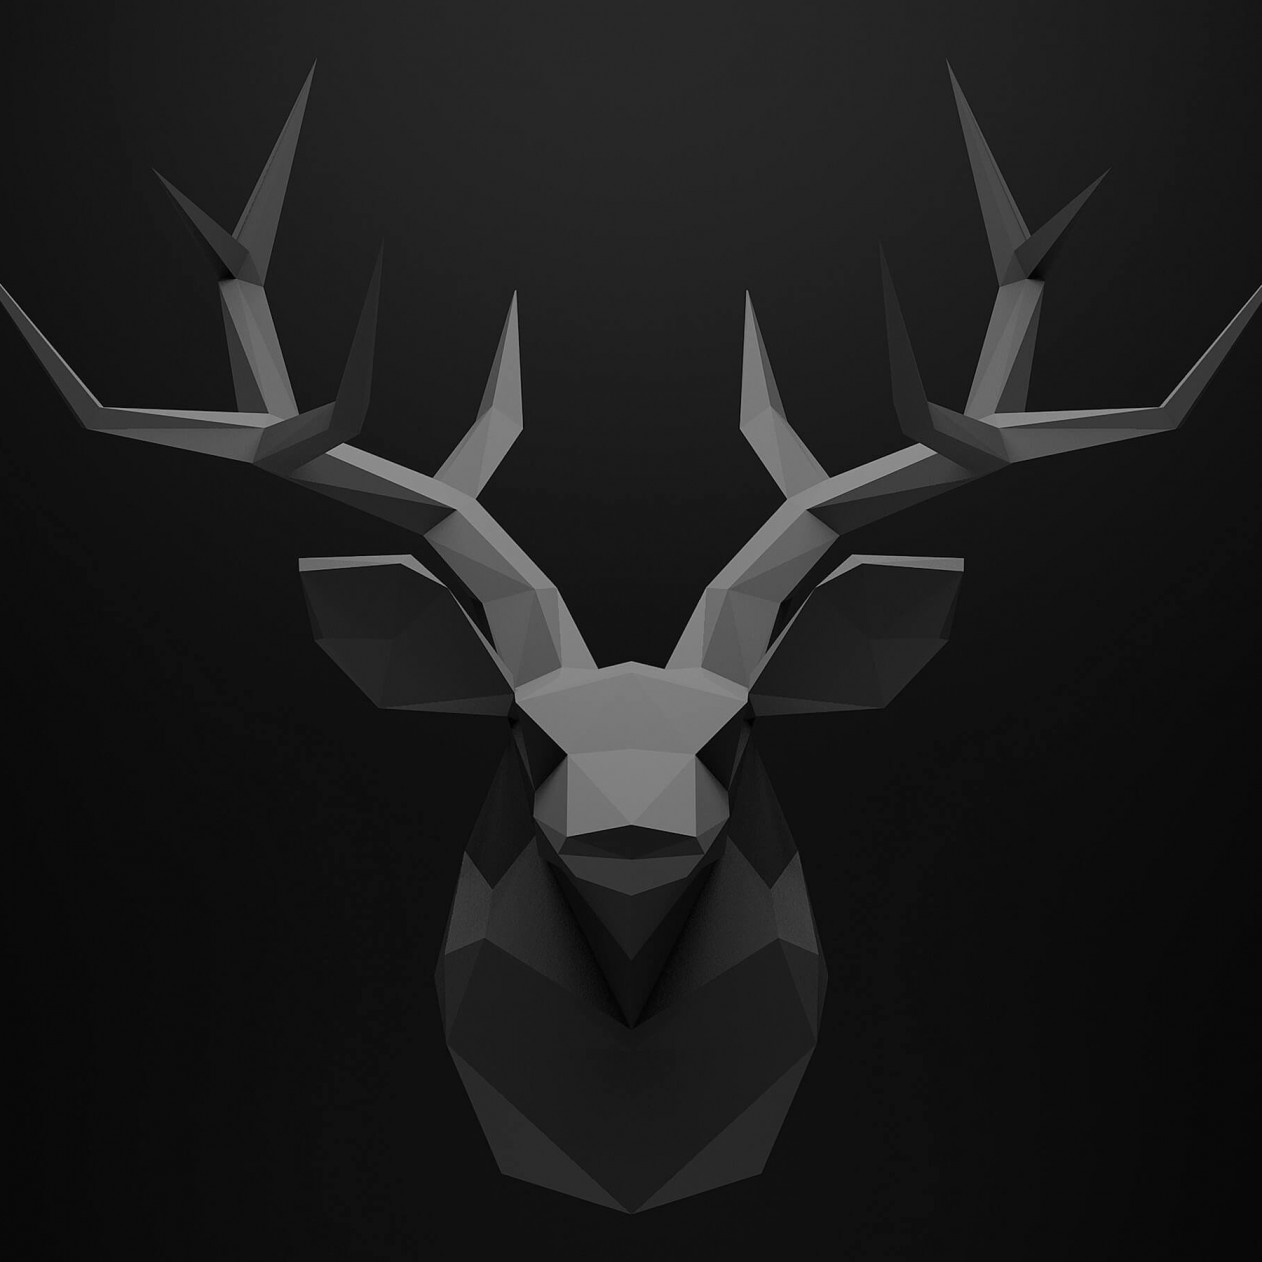 Low Poly Deer Head Wallpaper for Apple iPad mini